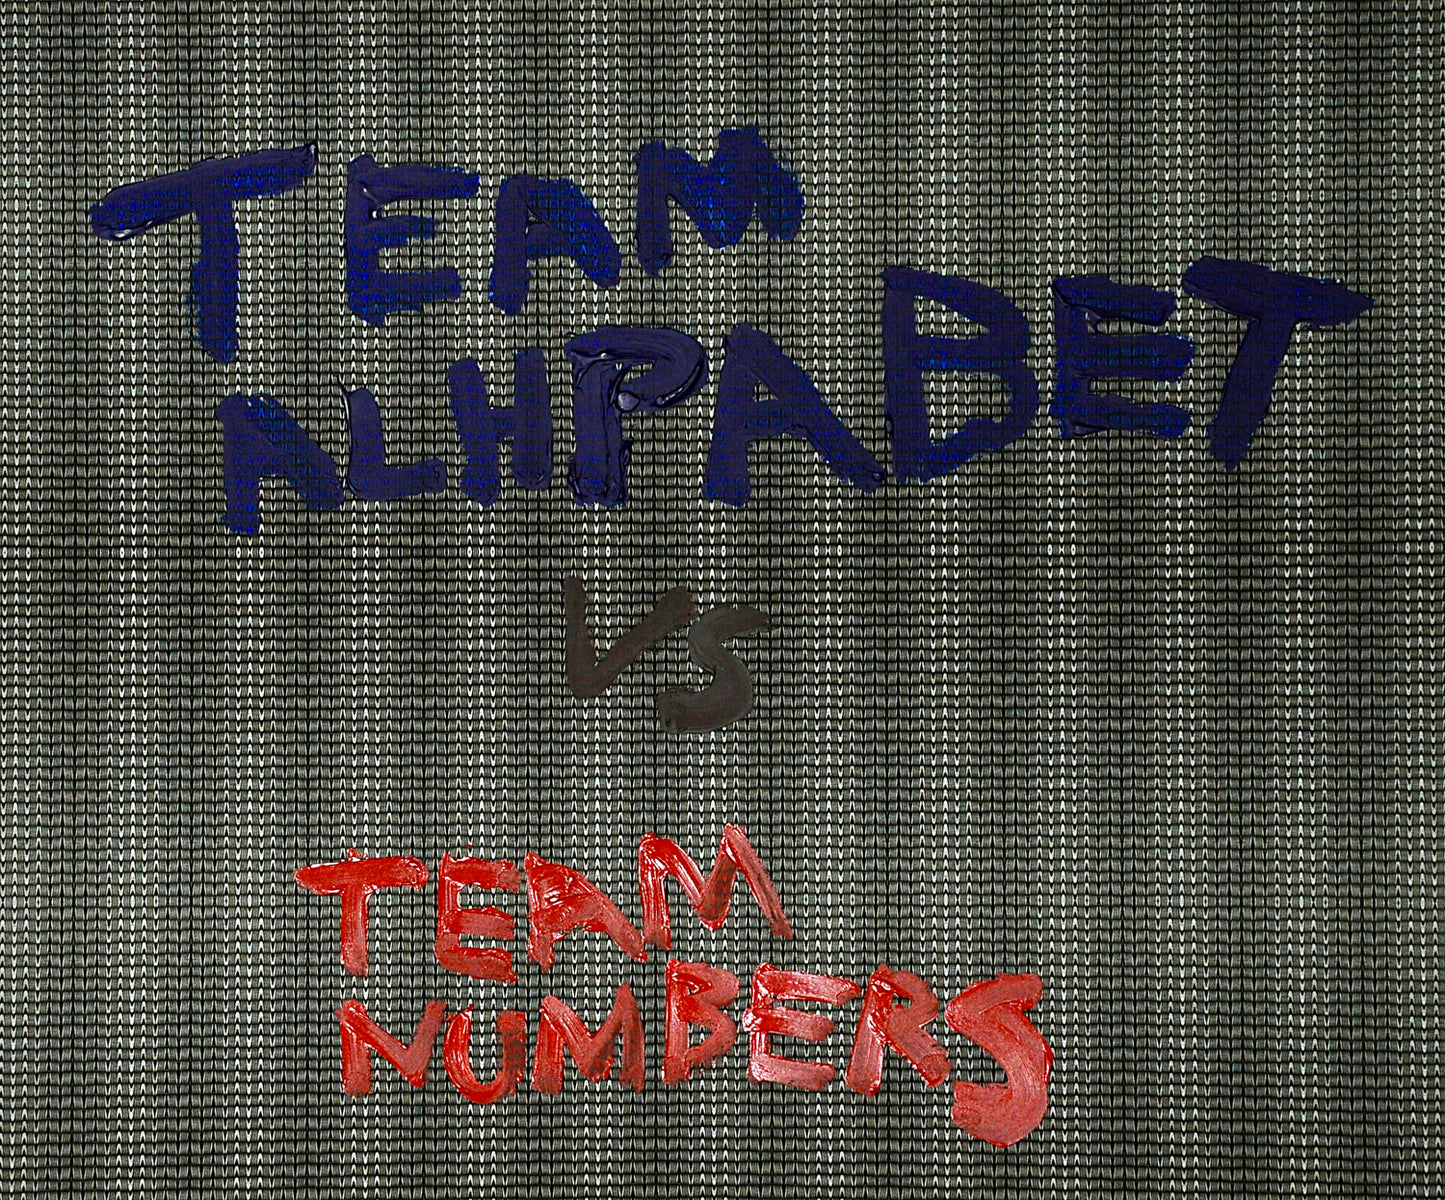 Team Alphabet vs Team Numbers (D1552)